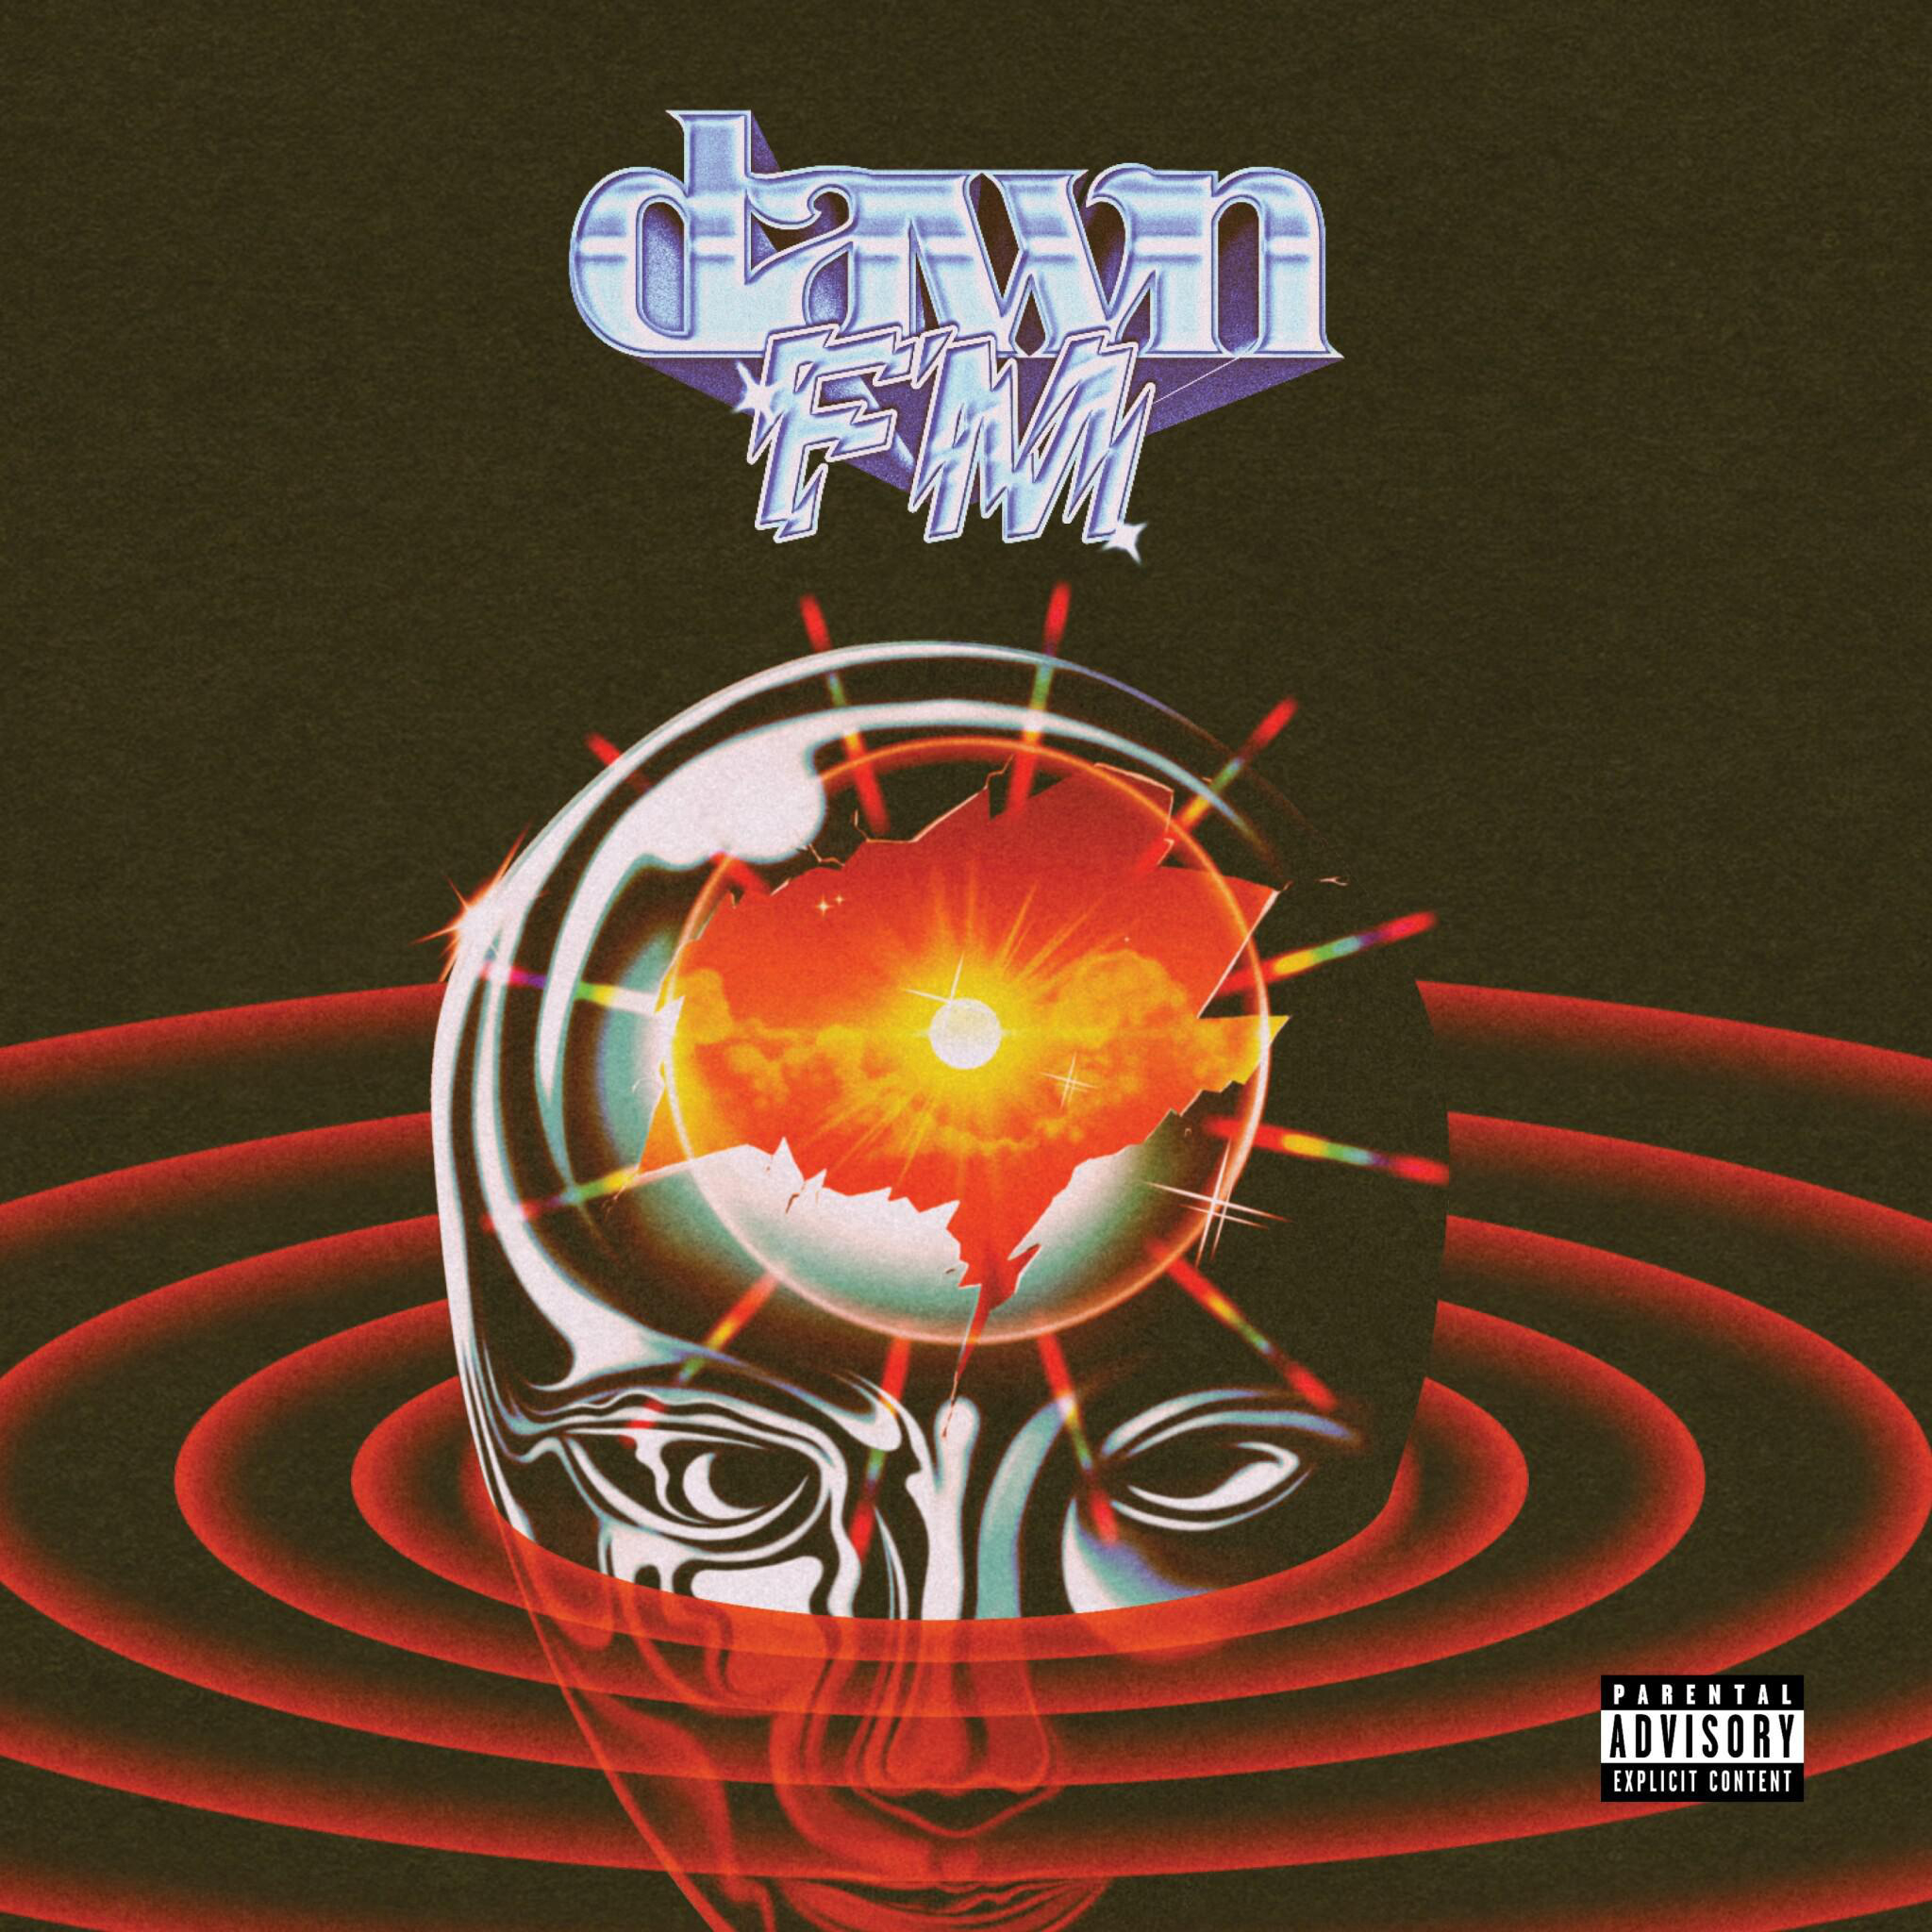 Dawn FM The - Weeknd (Alternative Cover) - (CD)